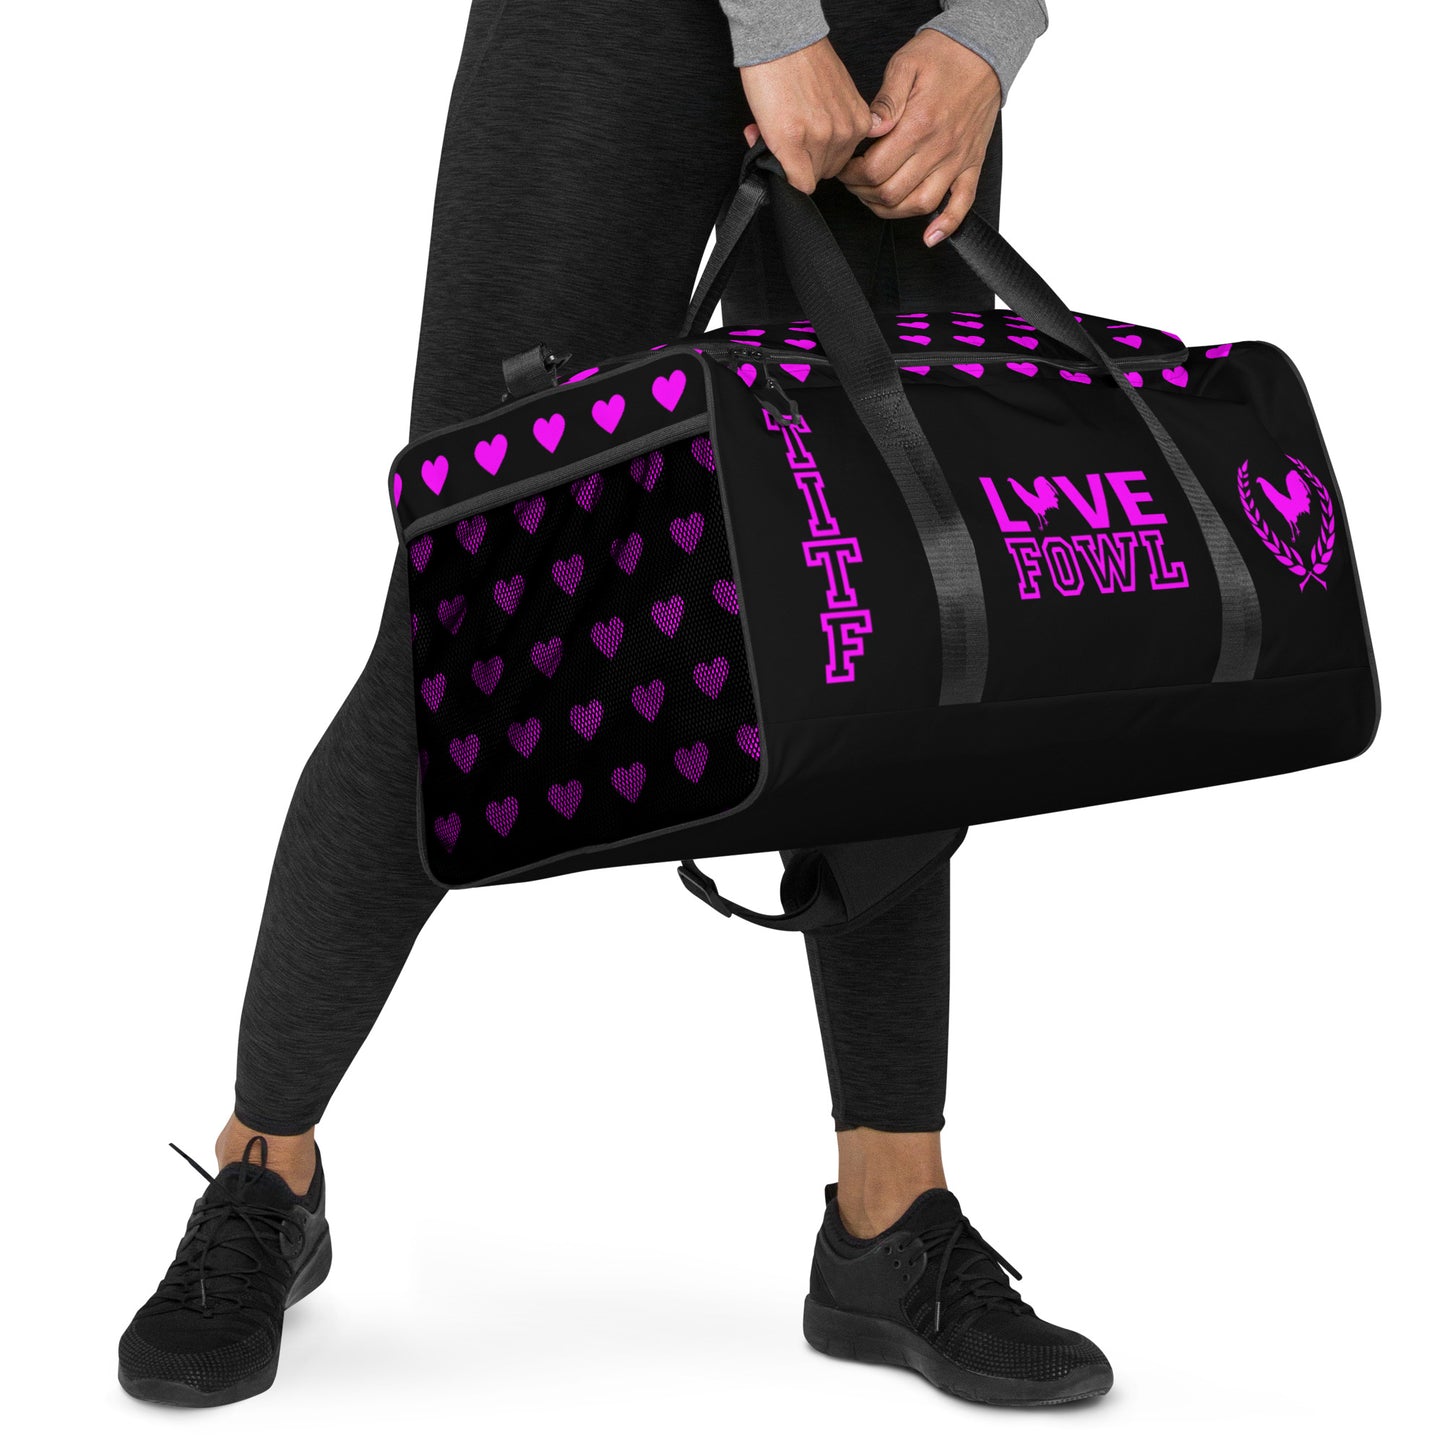 VS LOVE FOWL PINK HEART Gamefowl Rooster Black Duffle Bag